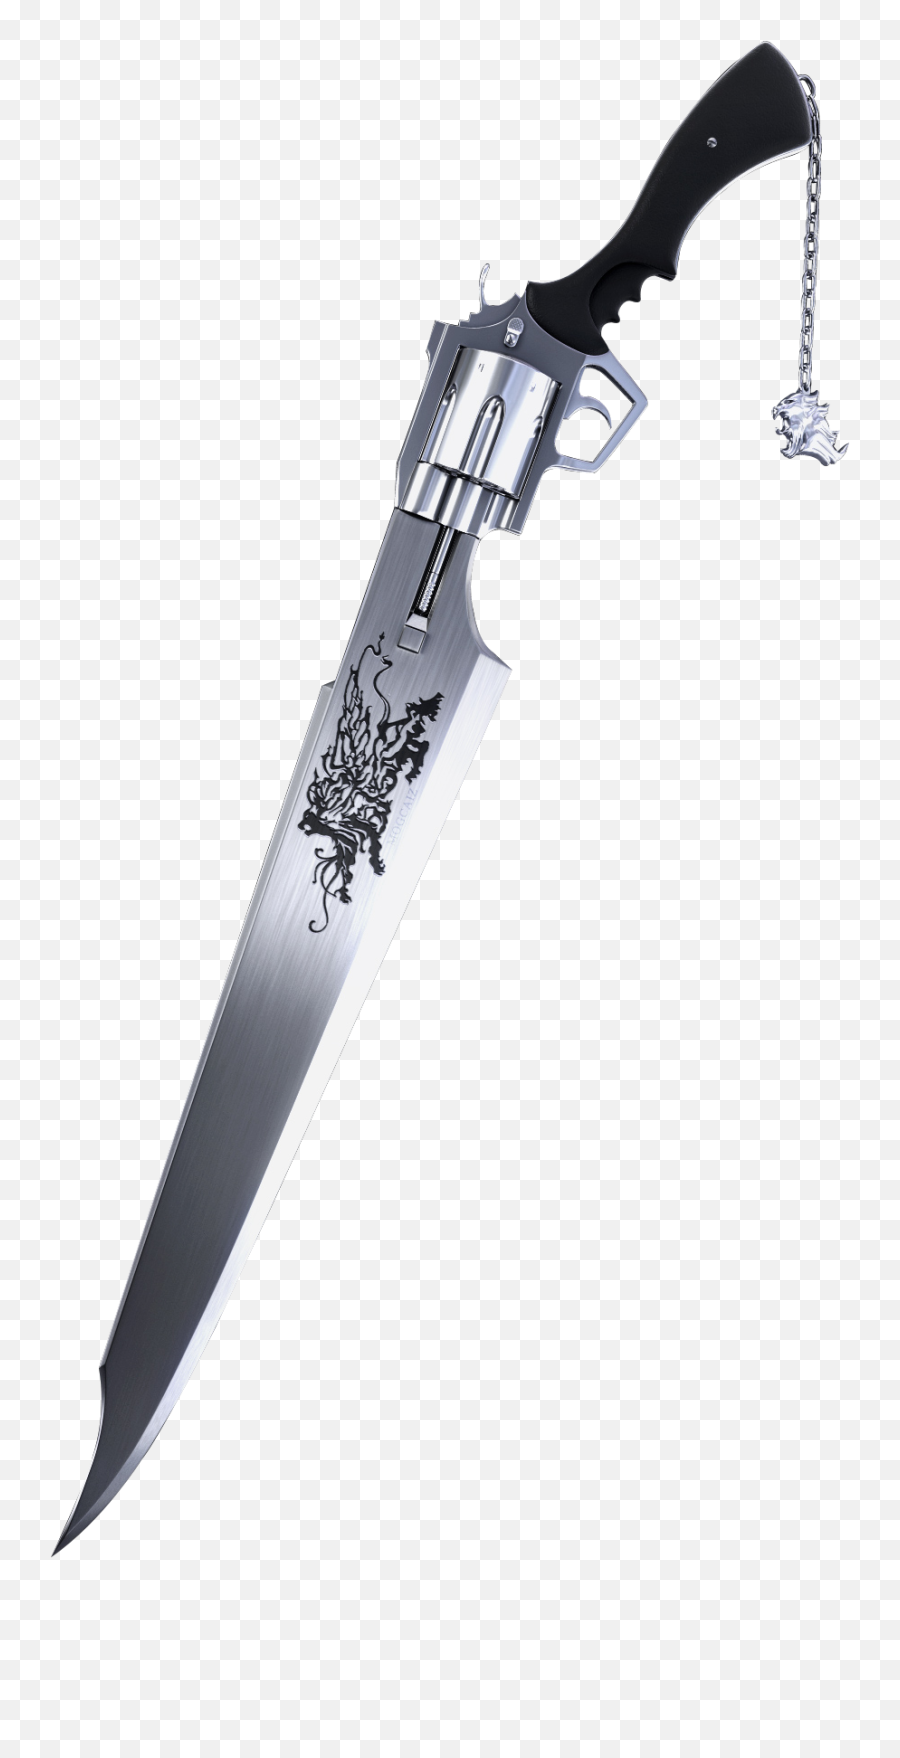 Largest Collection Of Free - Toedit Gun Stickers On Picsart Final Fantasy Viii Gunblade Emoji,Skull Gun Knife Emoji